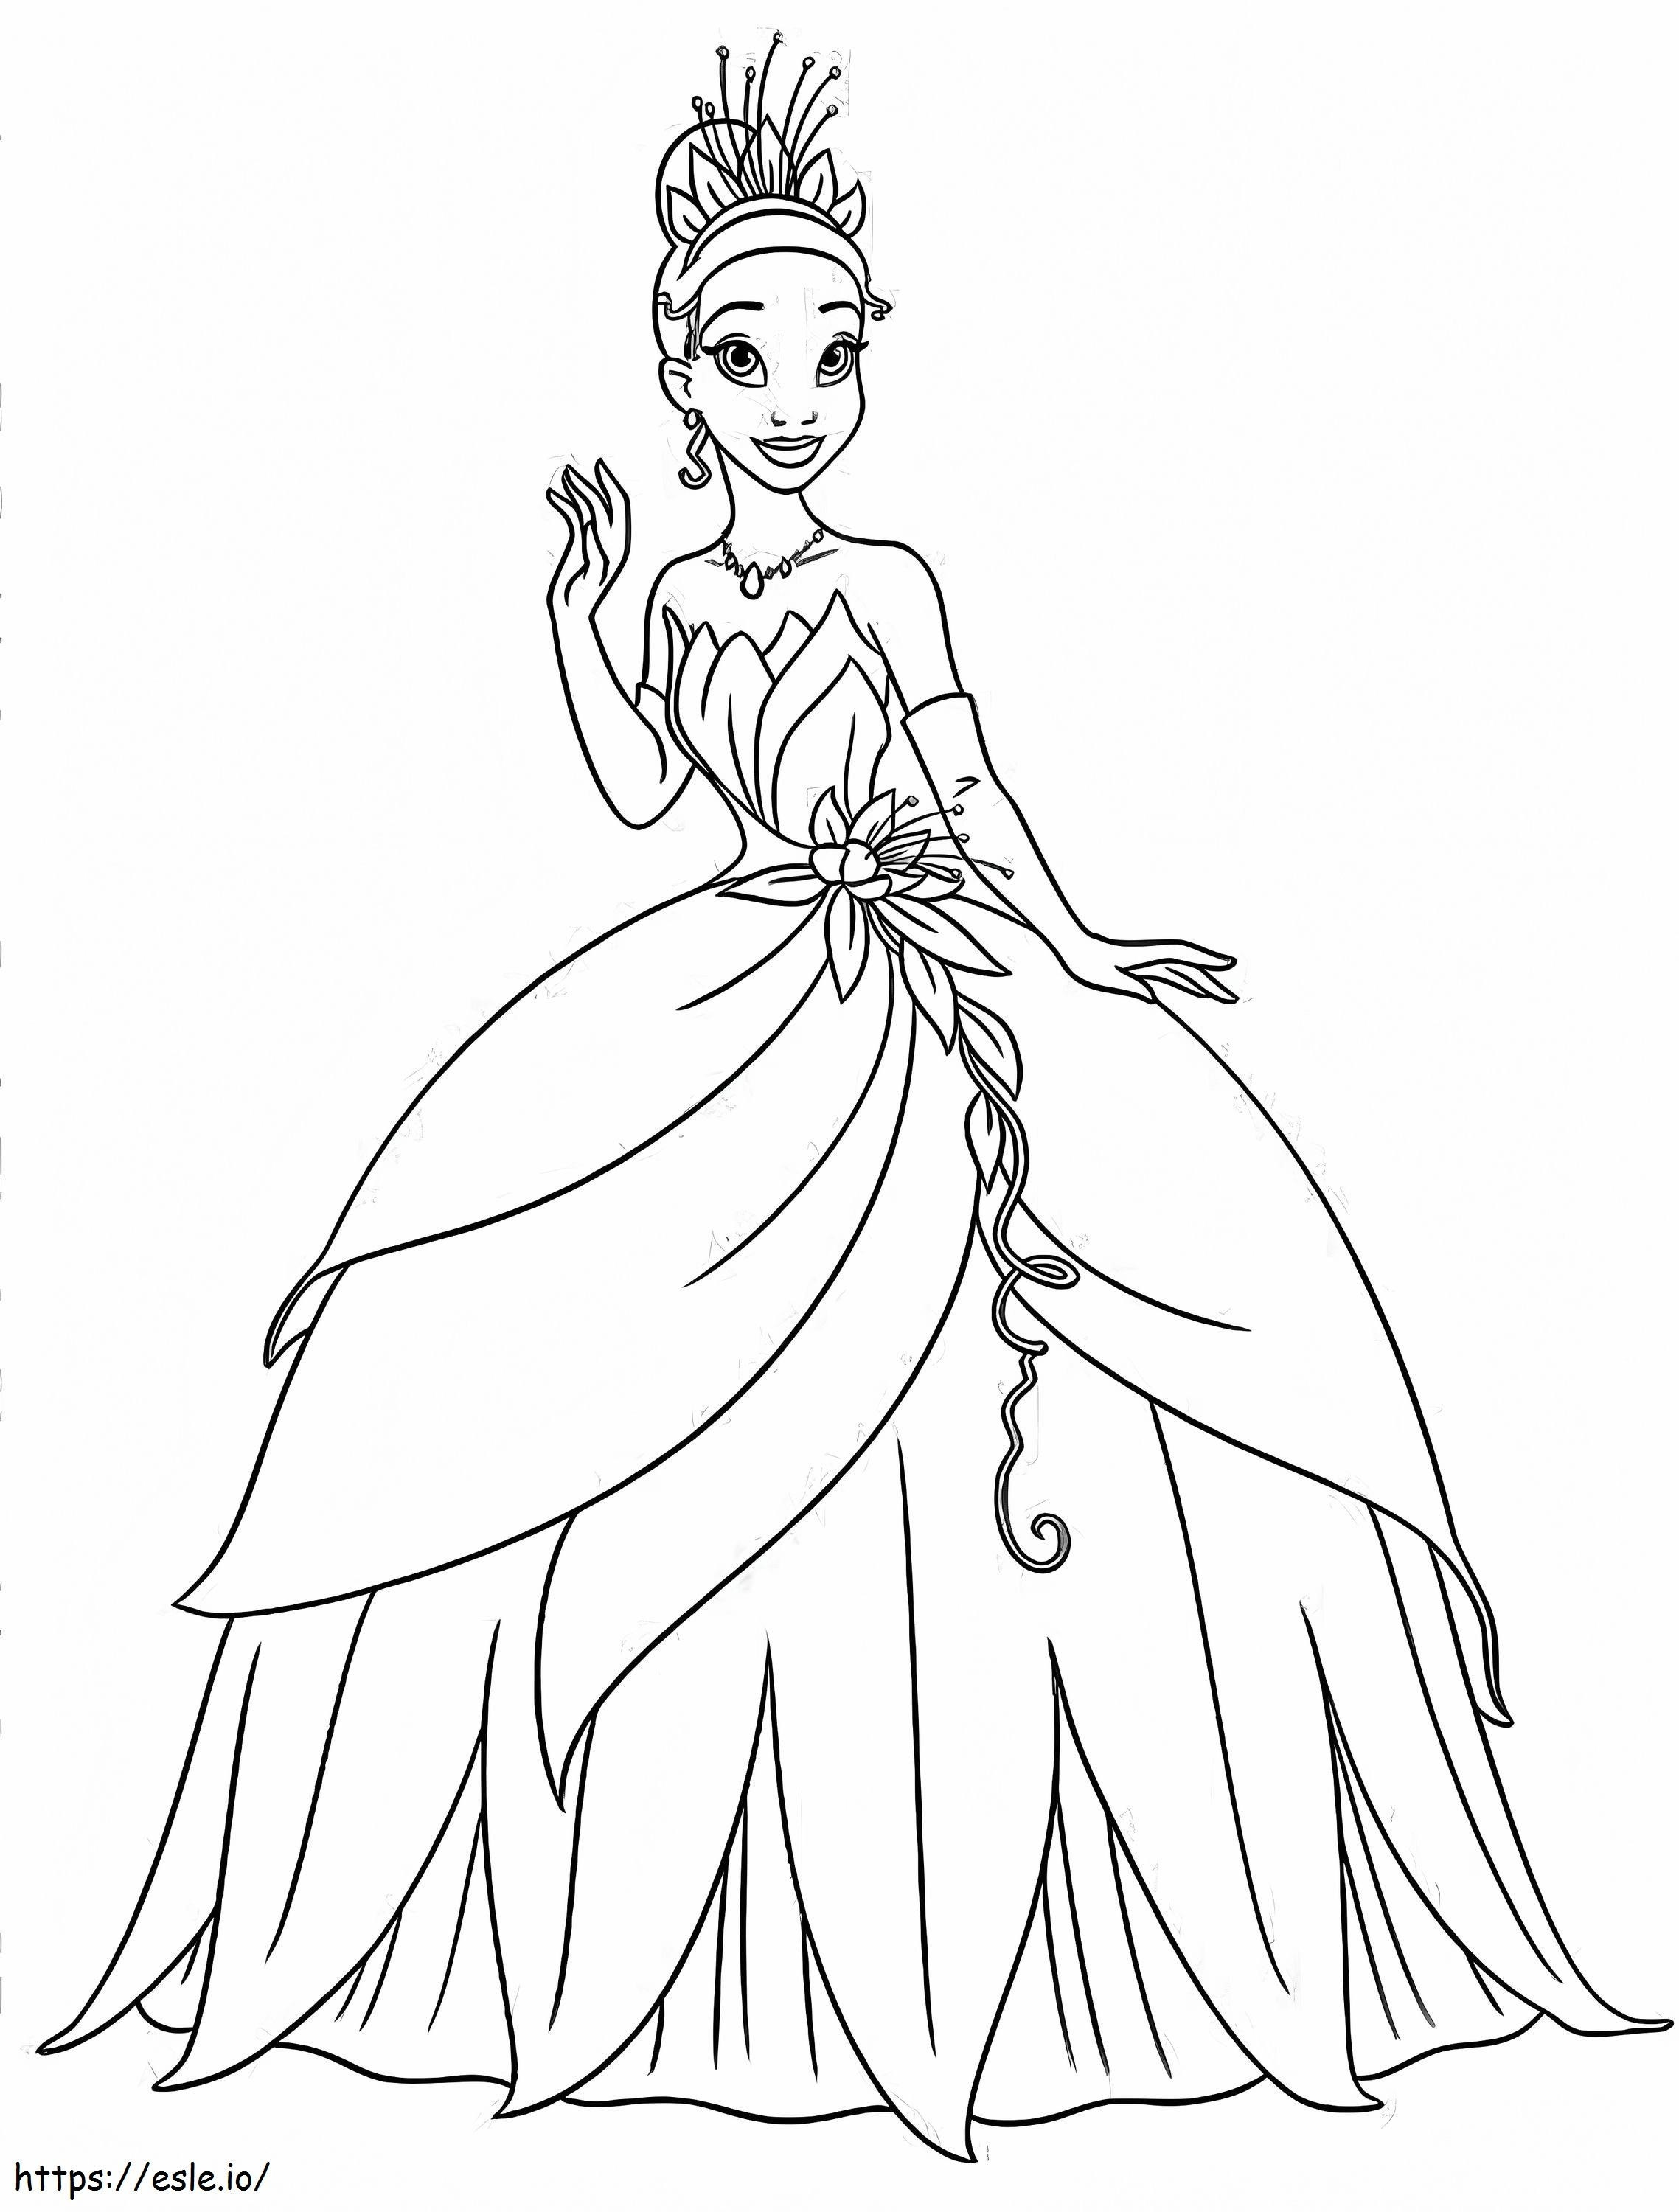 Coloriage Belle Princesse Tiana 5 à imprimer dessin